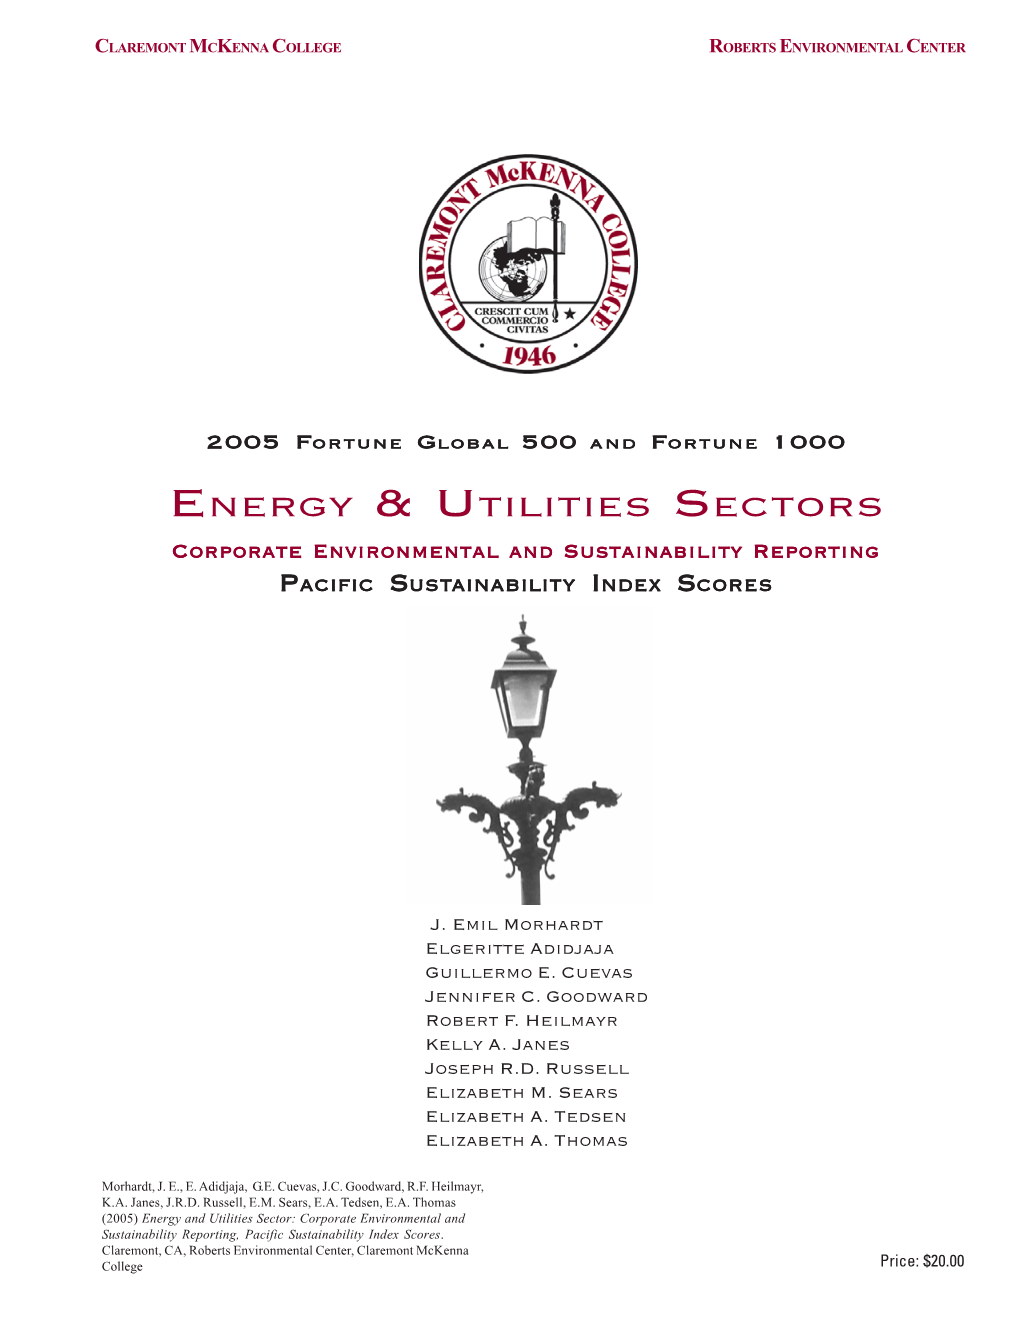 Energy & Utilities Sectors